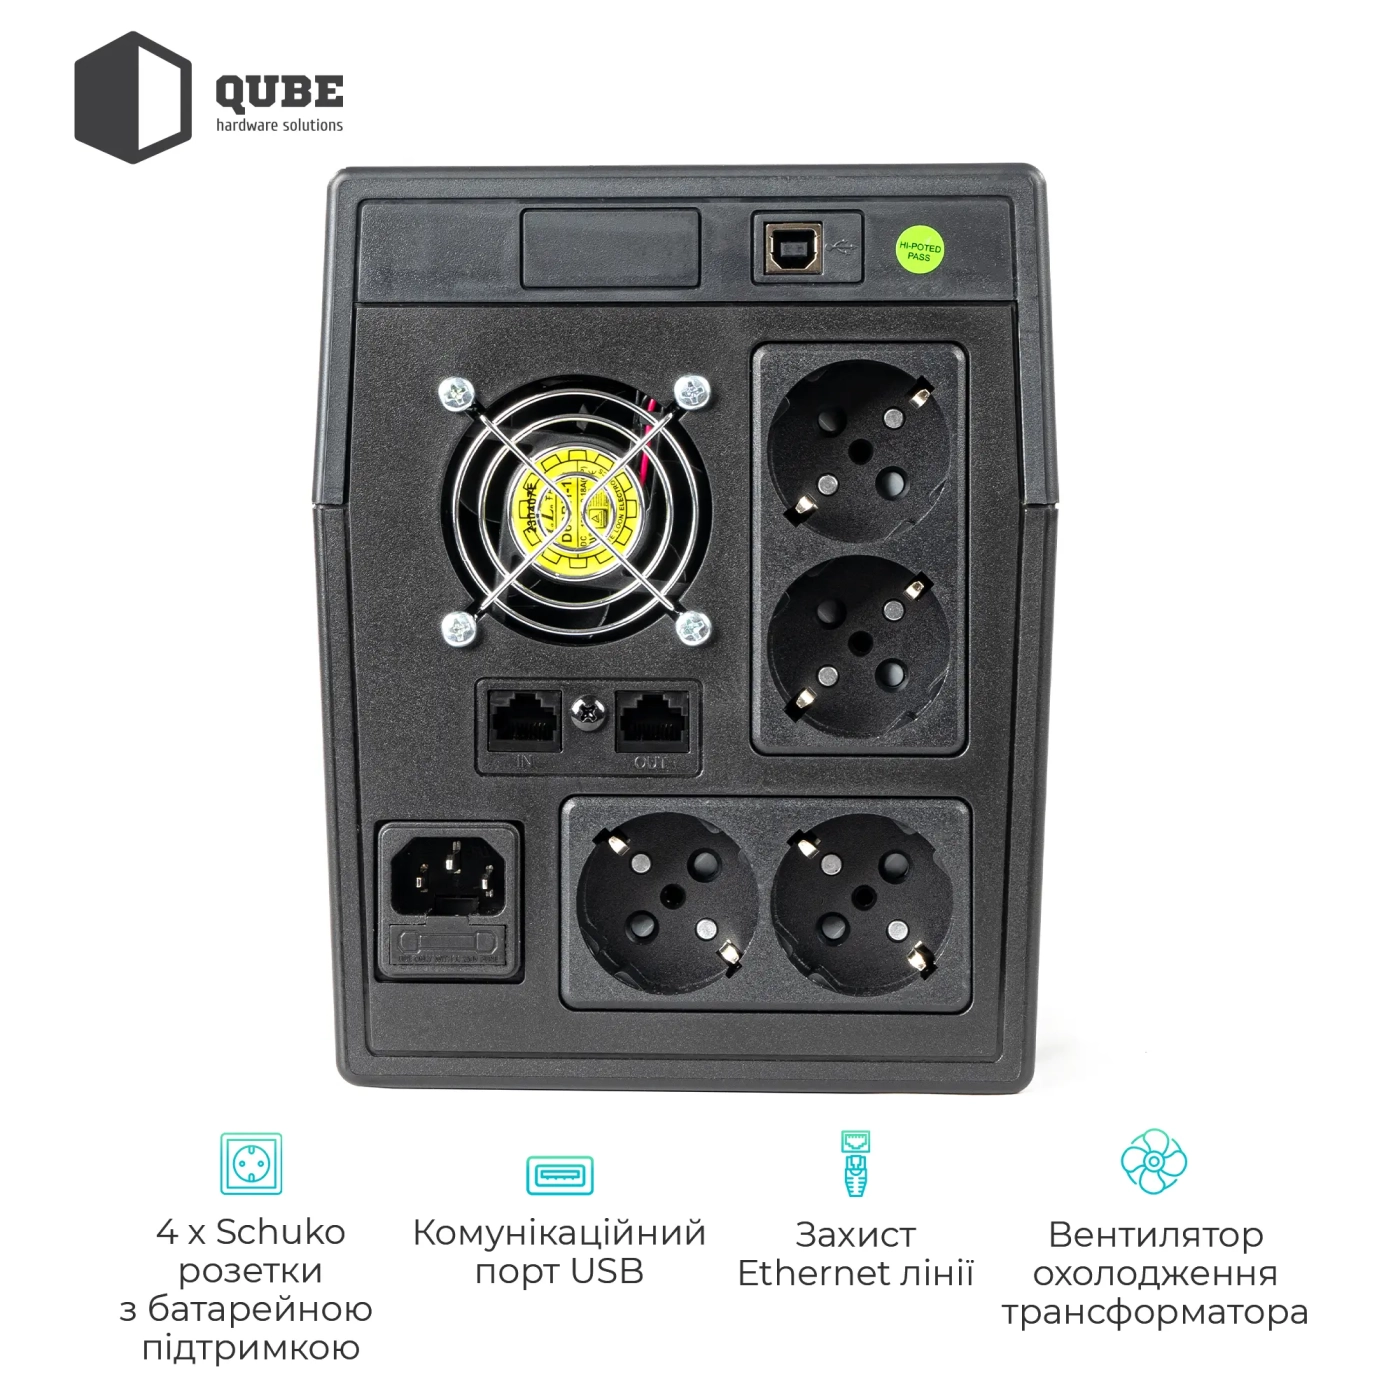 Купить ИБП (UPS) линейно-интерактивный Qube DG 1550, 1550VA/900W, LCD, 4 x Schuko, RJ-45, USB - фото 4